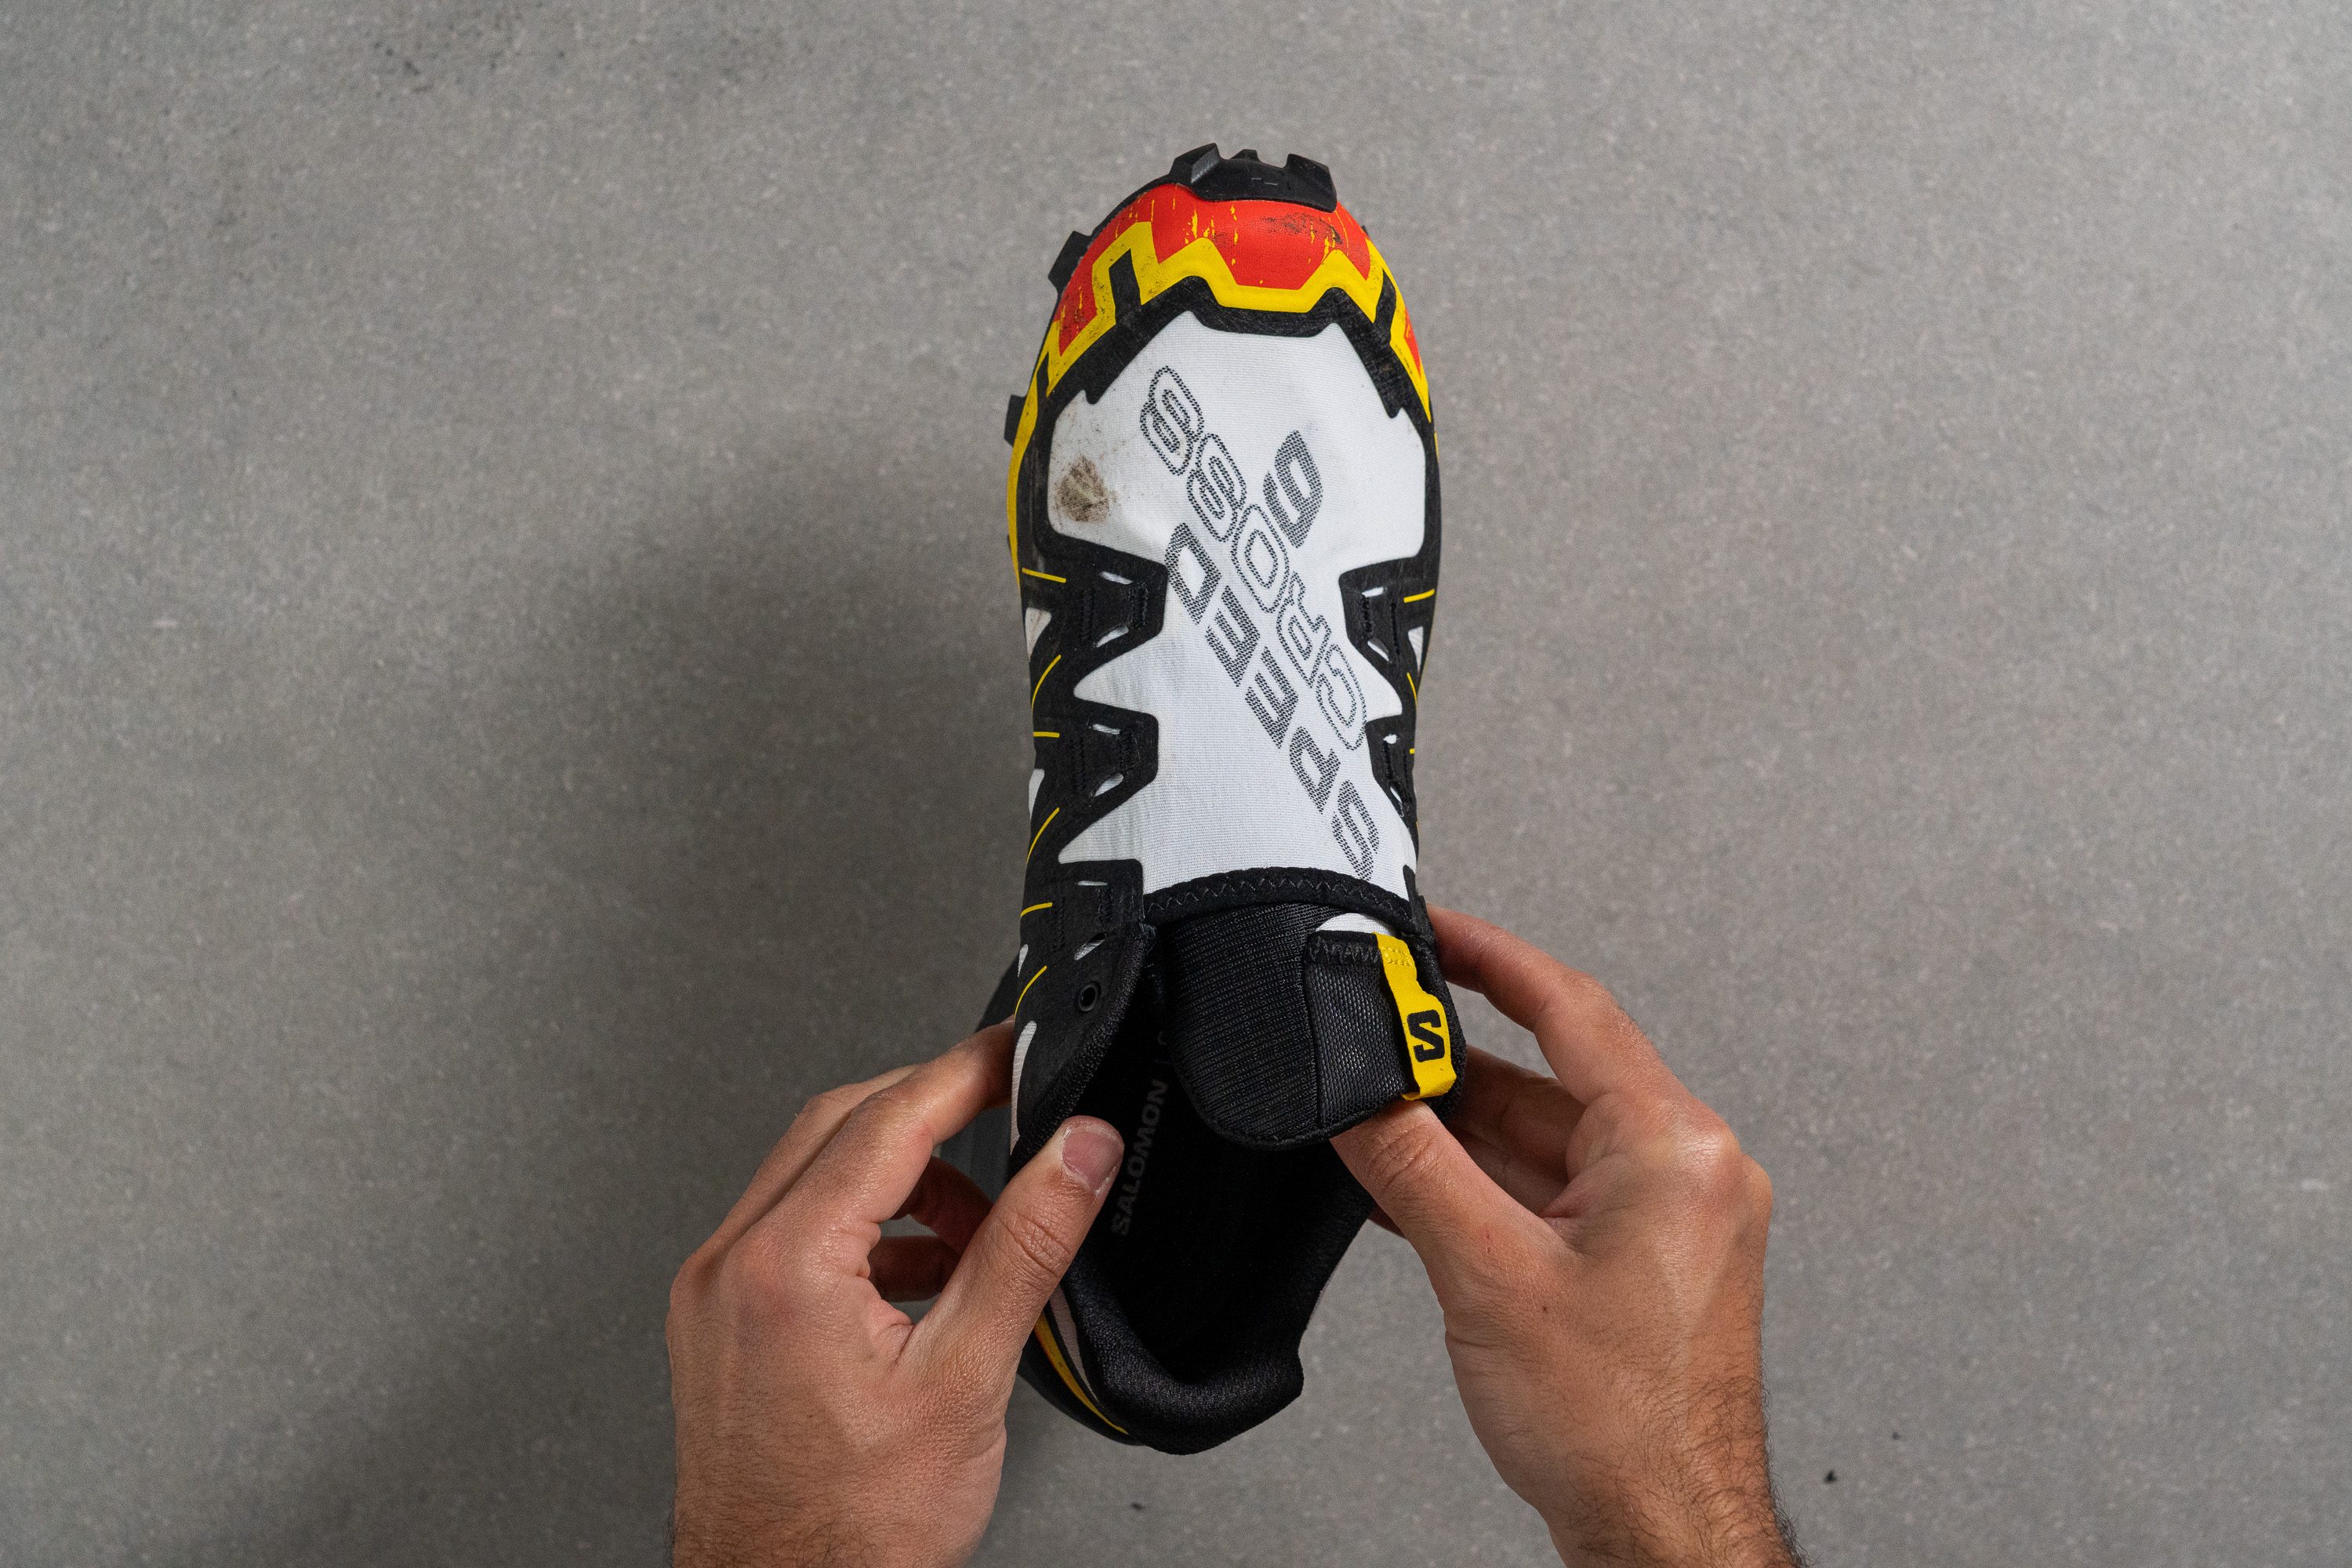 comme des garcons salomon collaboration platform sneaker sense feel rx 3 release price zapatillas de running Salomon hombre trail talla 38.5 moradas